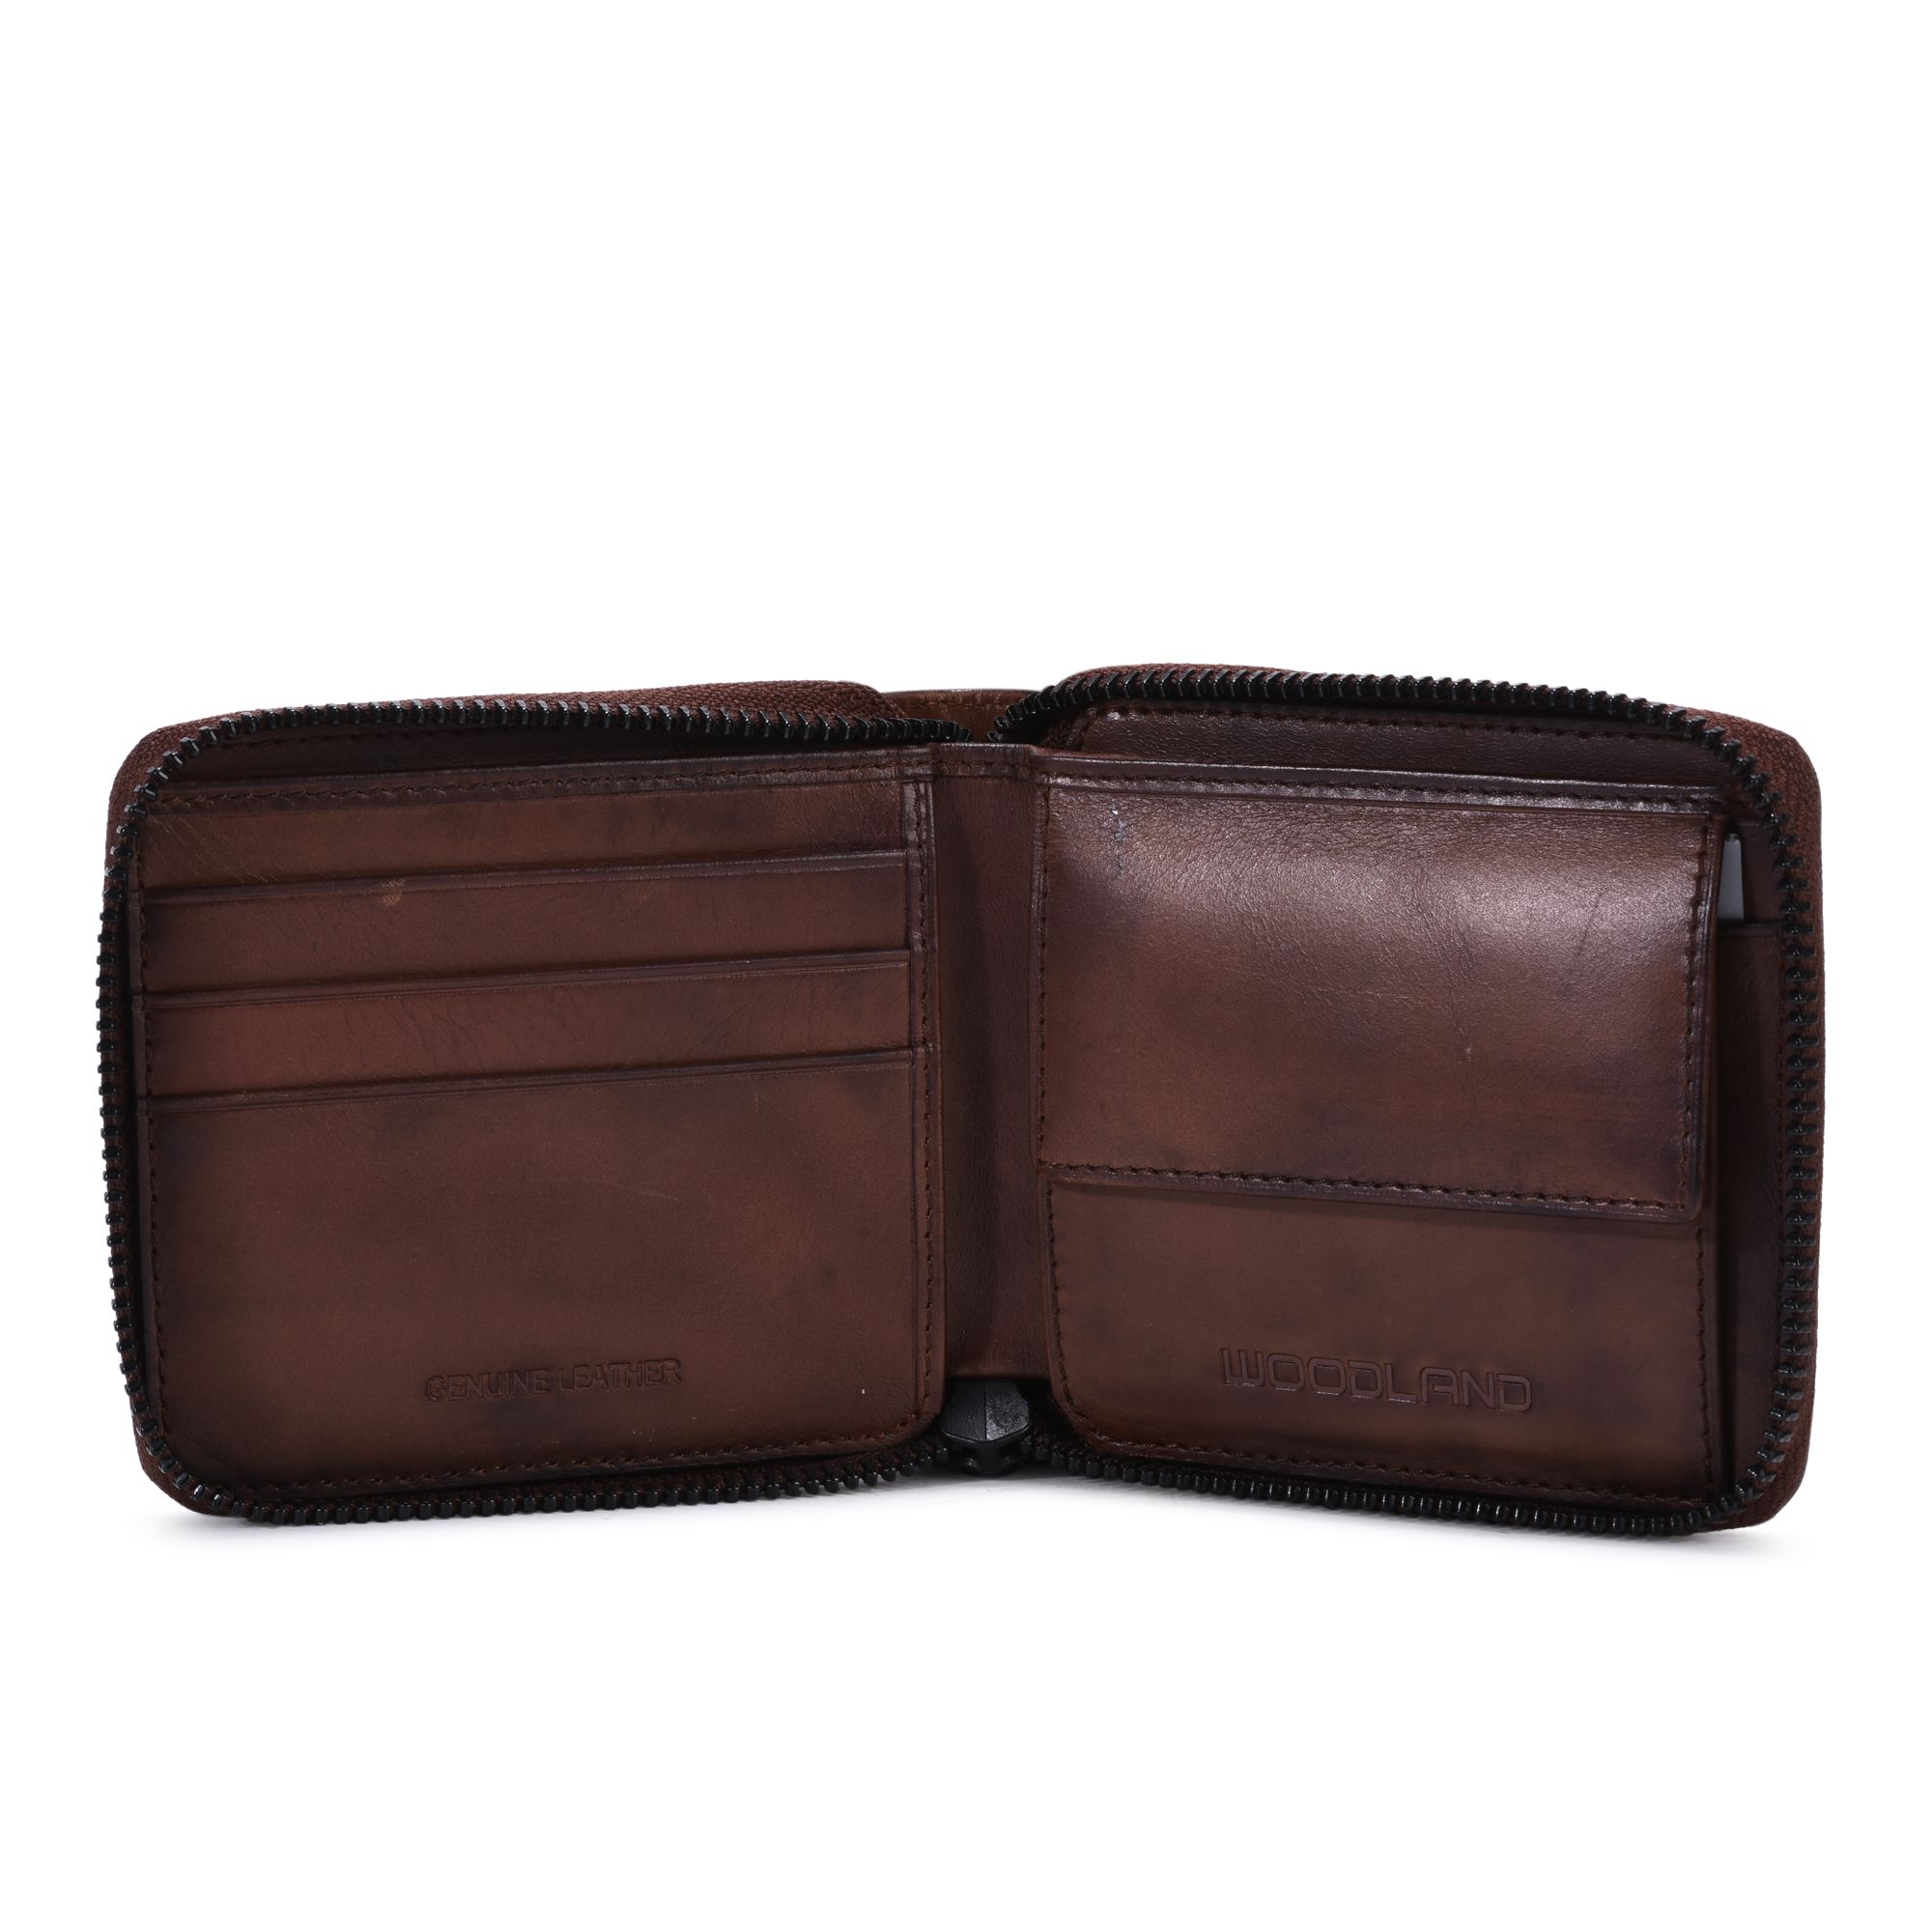 Tan Leather Wallet For Men